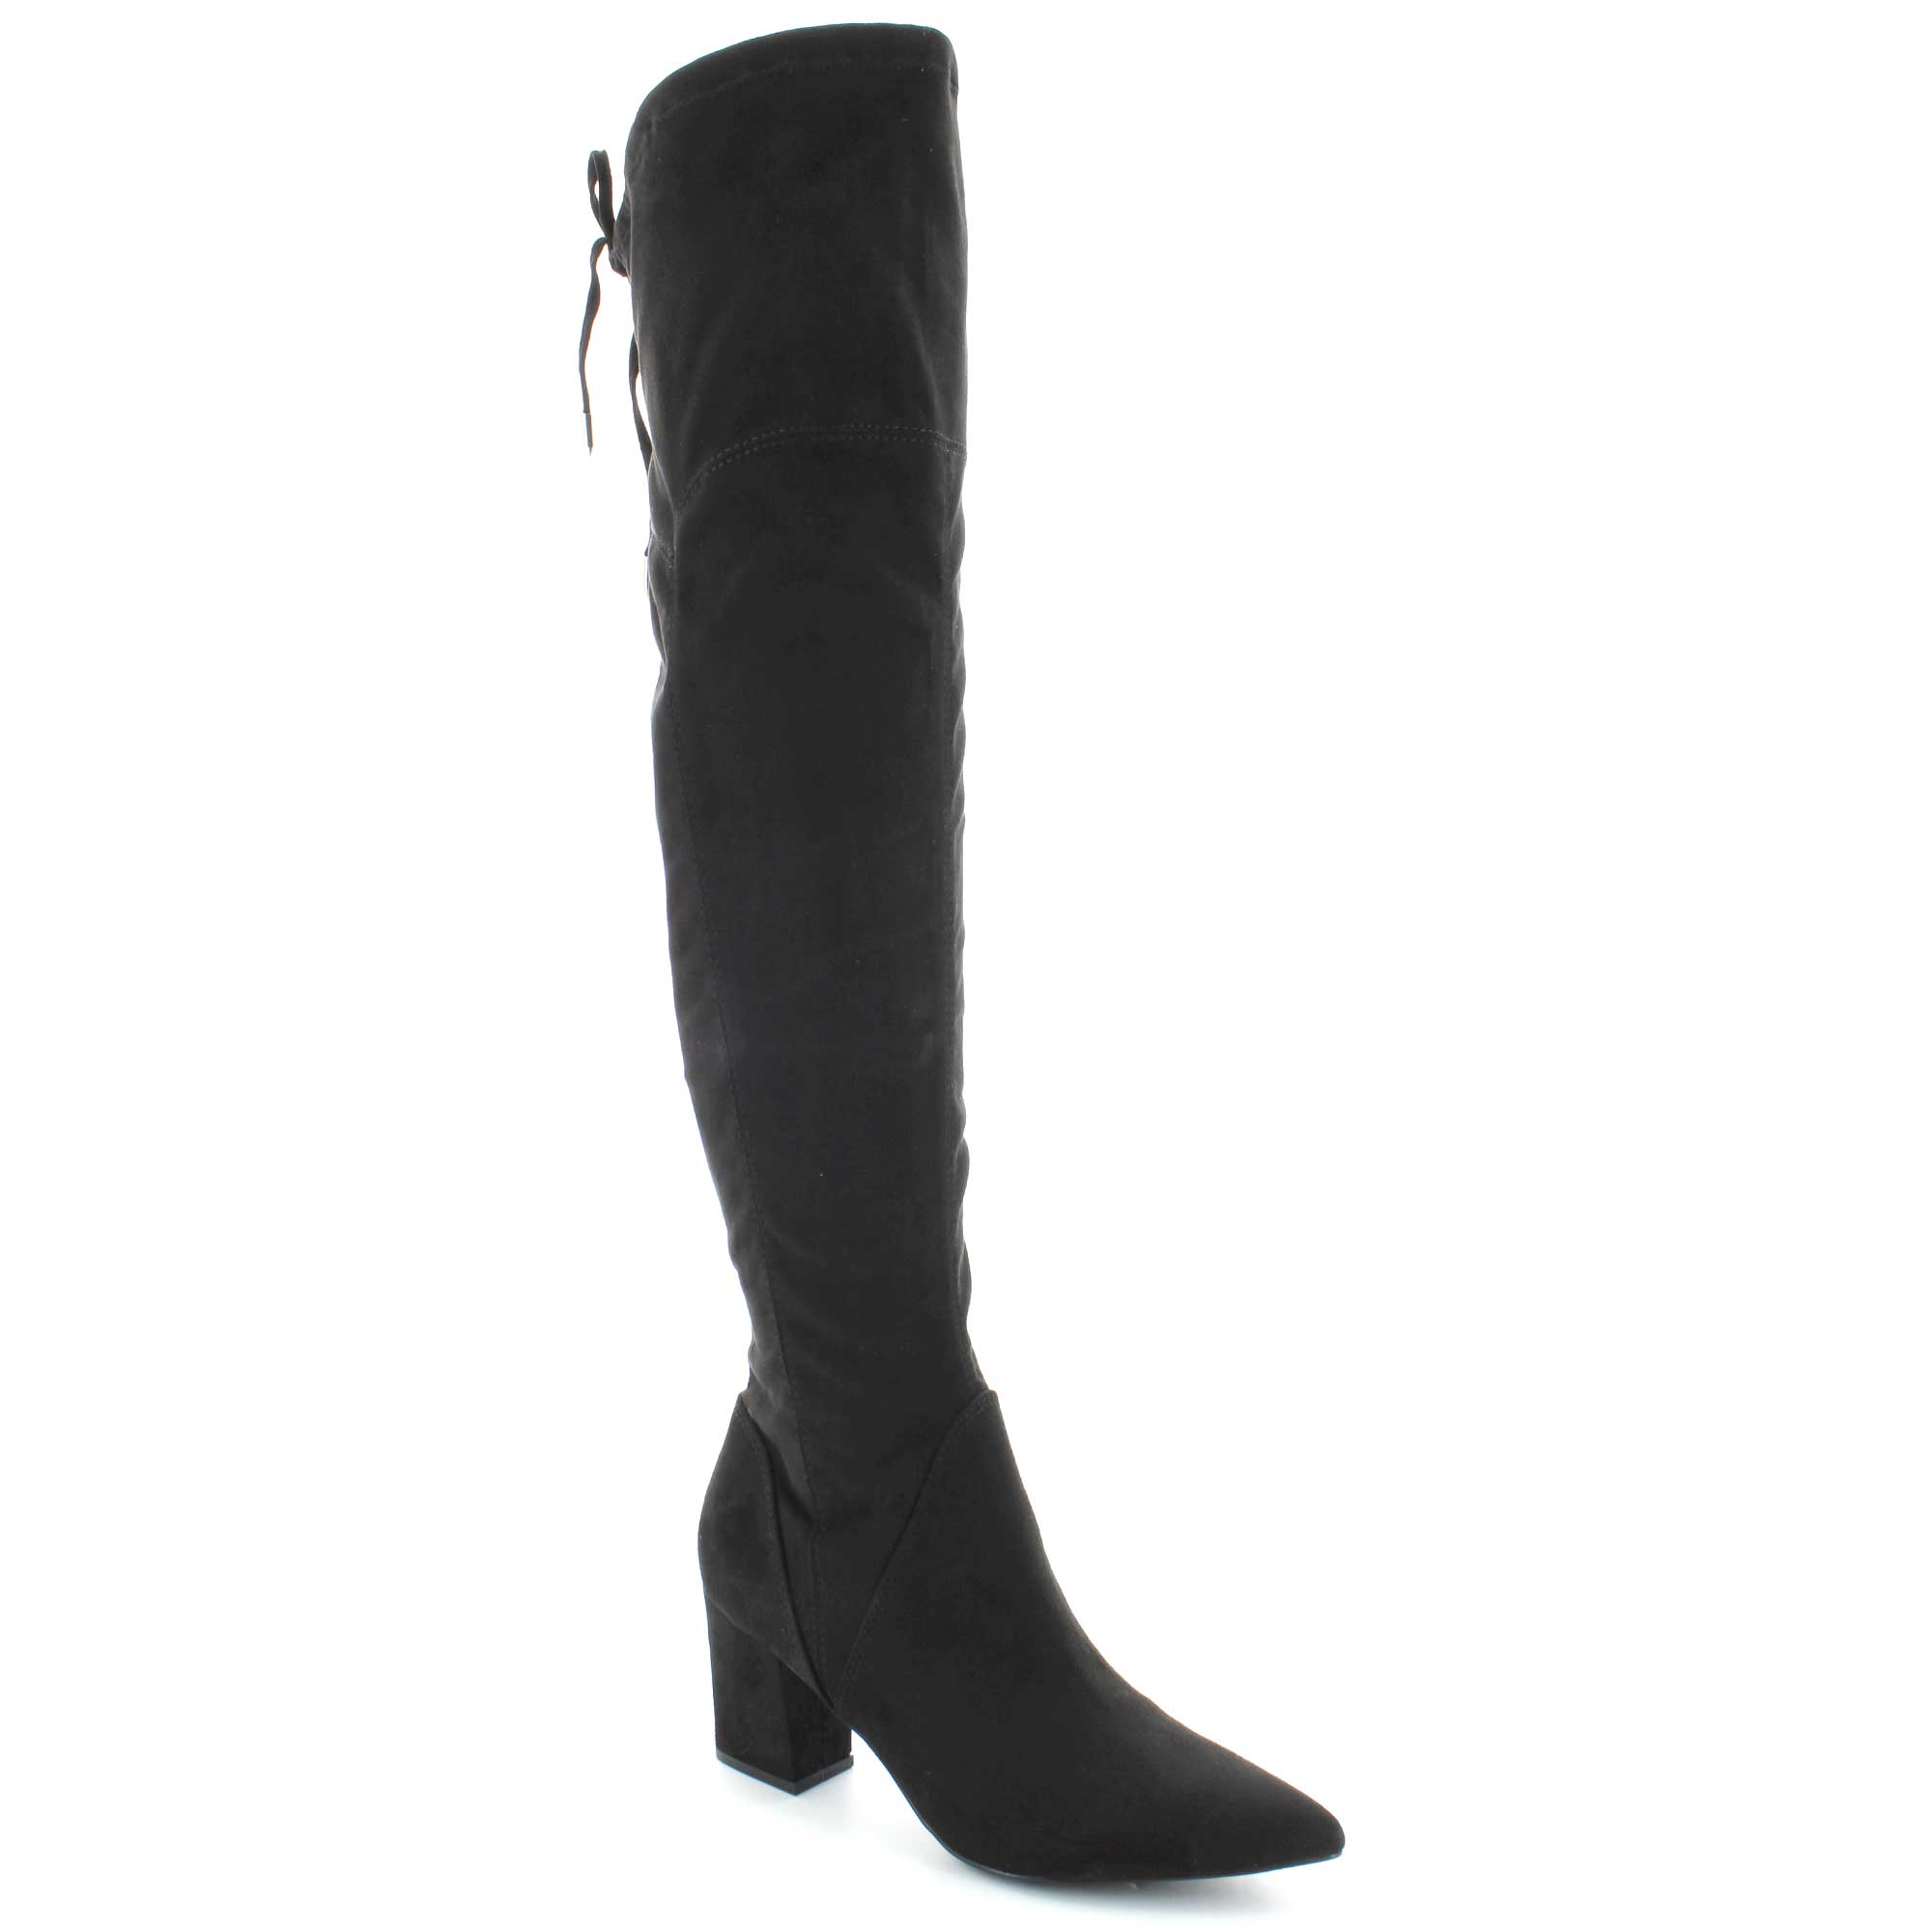 Women's Over-The-Knee Boots | Shop Now at SHOE DEPT. ENCORE